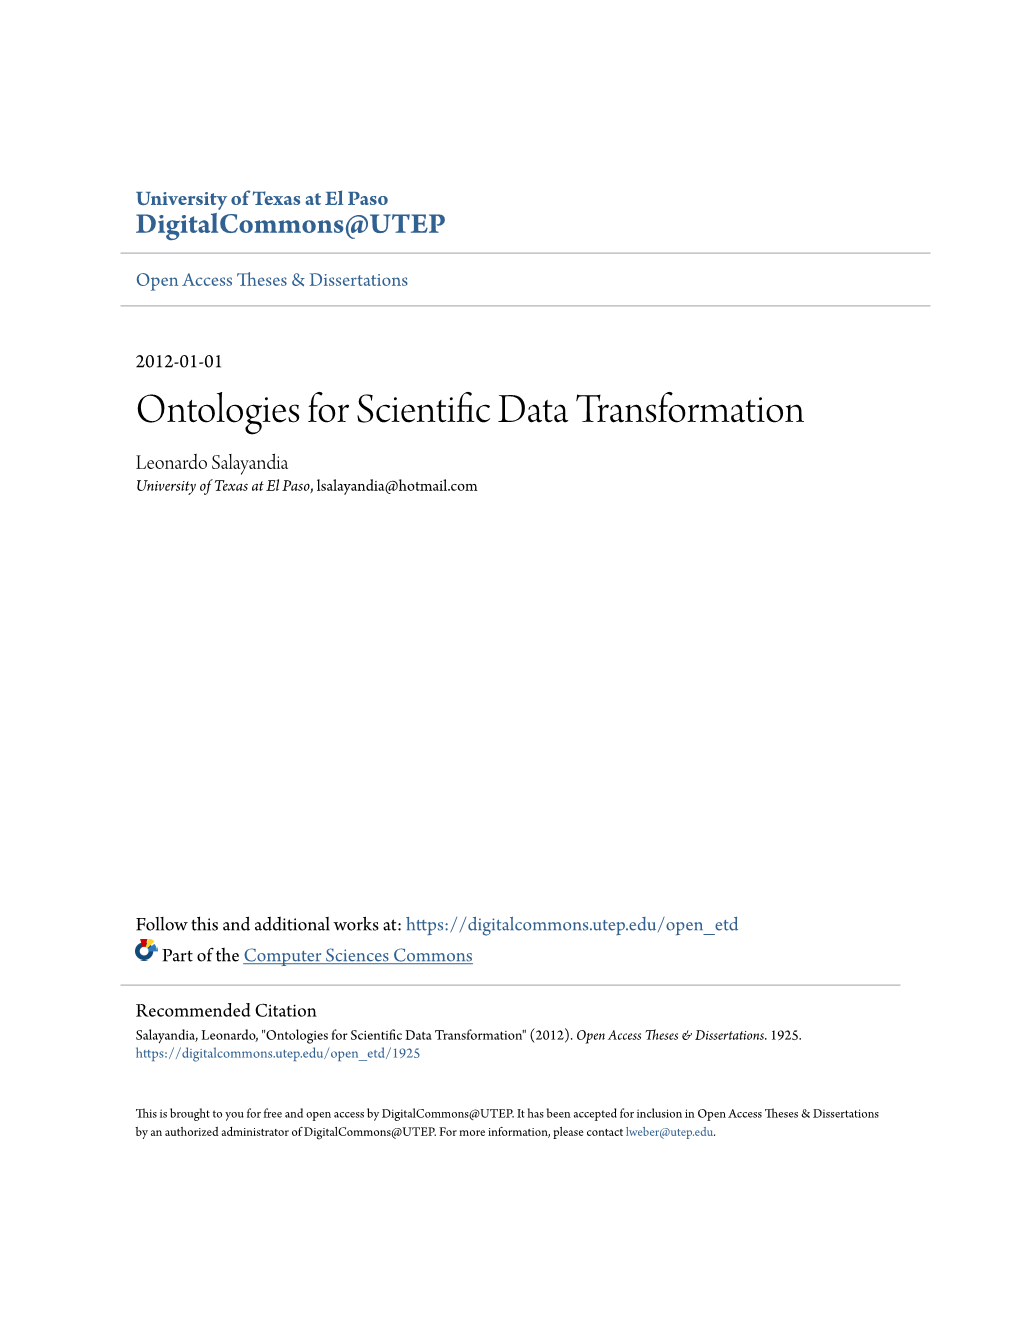 Ontologies for Scientific Data Transformation